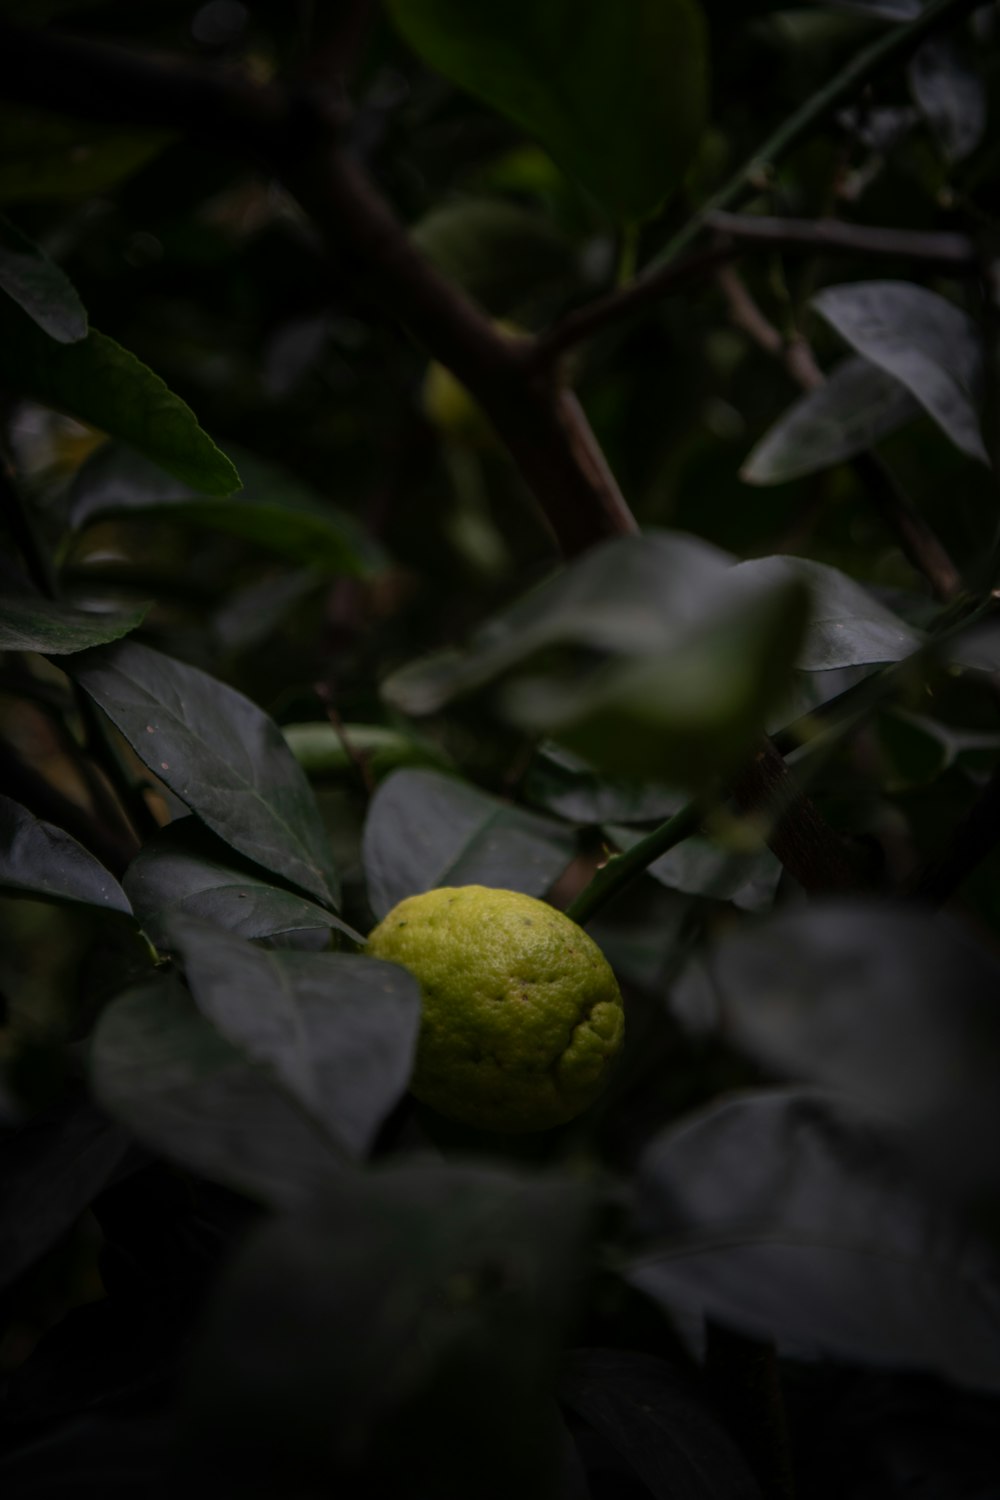 a lemon is growing on a tree branch